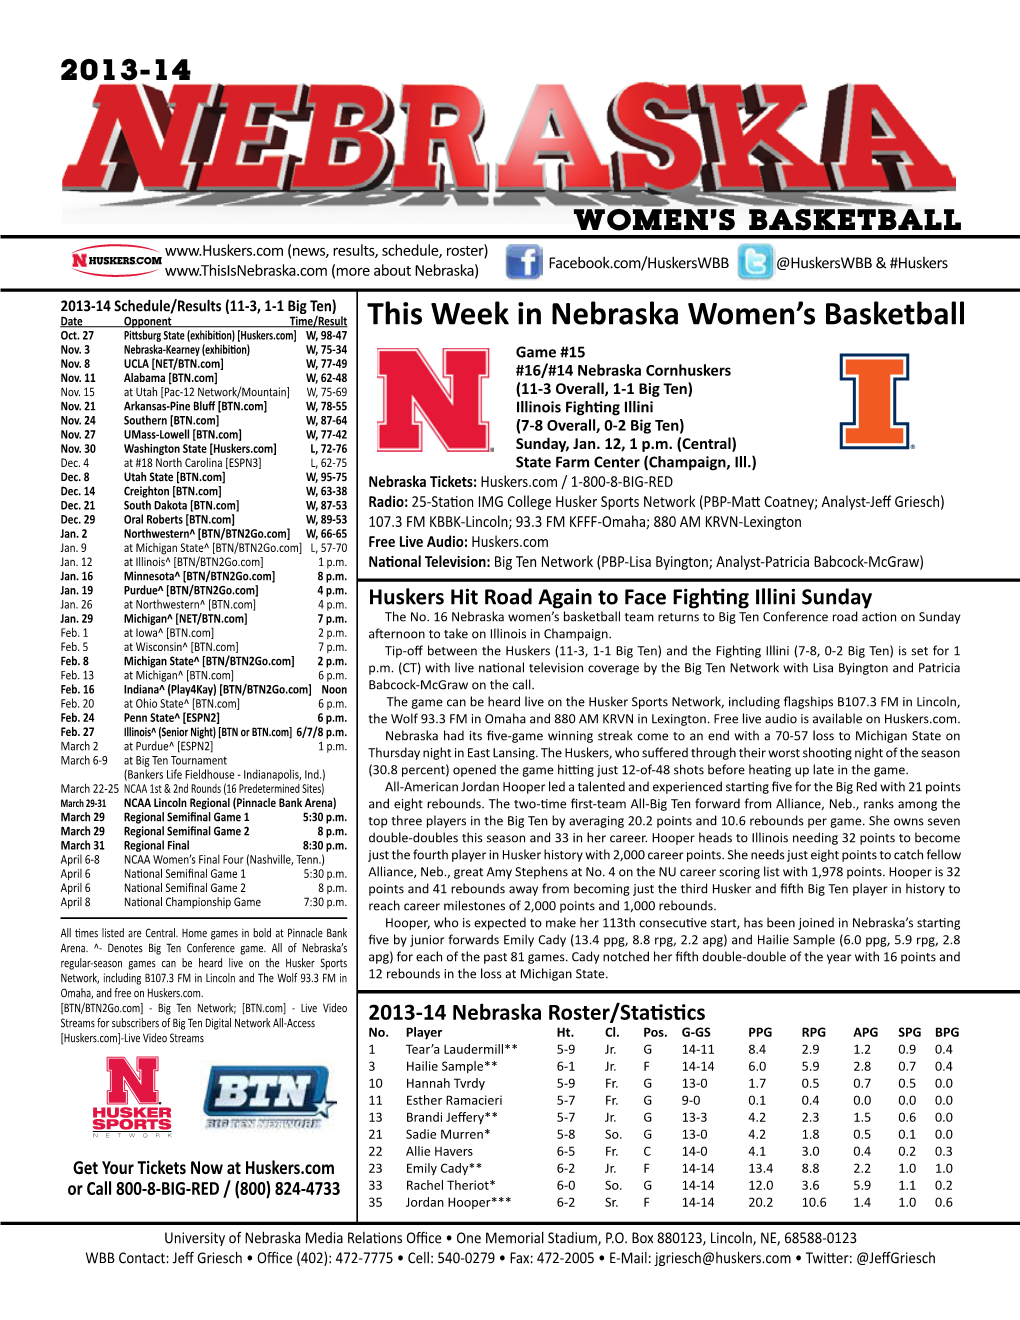 This Week in Nebraska Women's Basketball